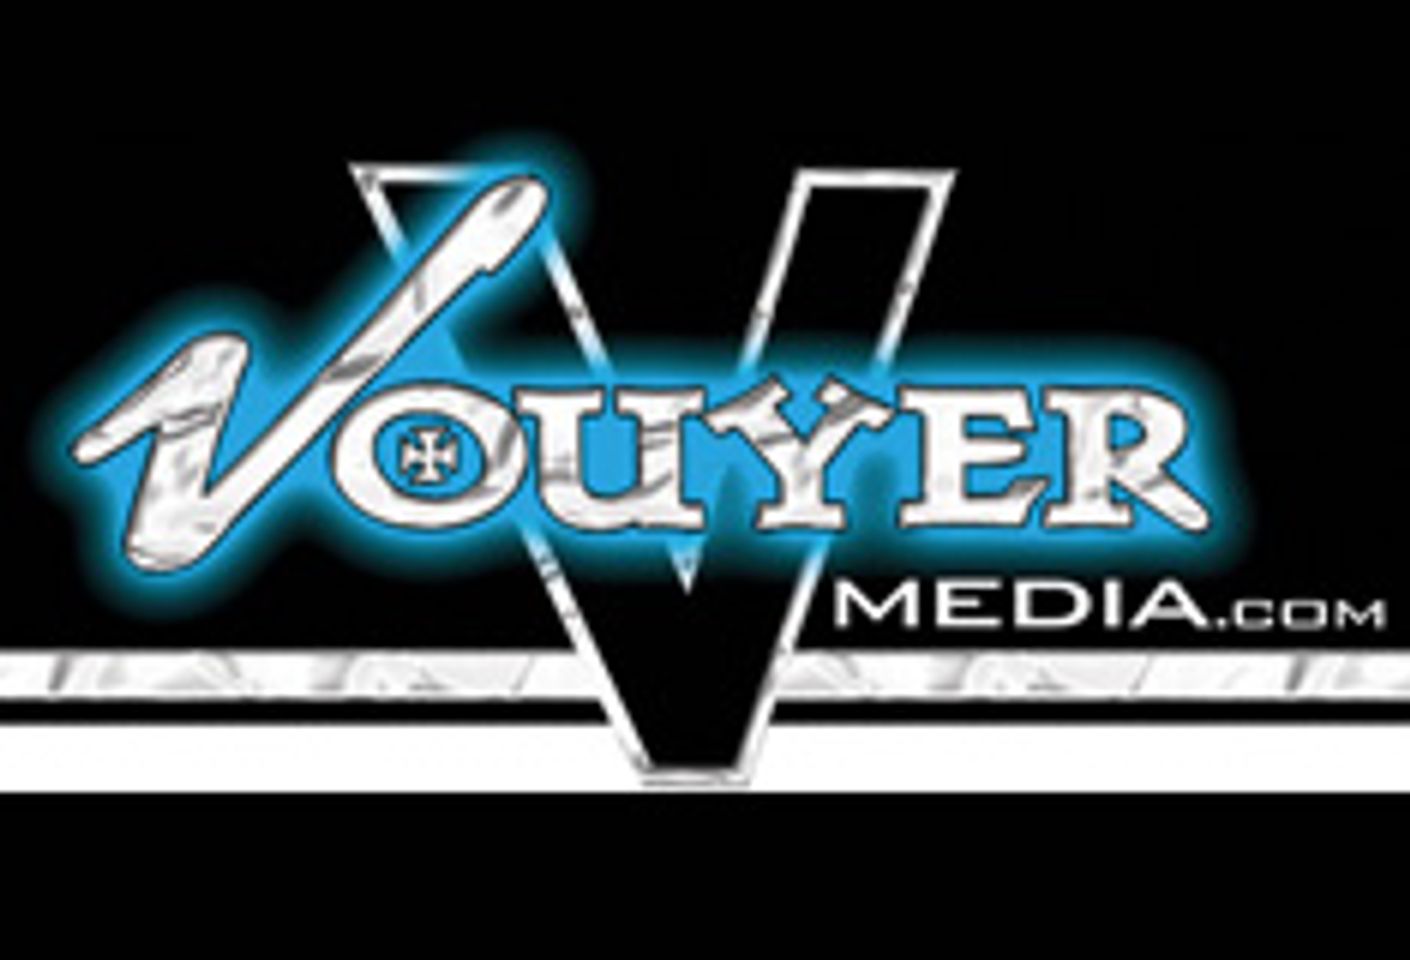 Vouyer Media Congratulates its AVN Award Winners